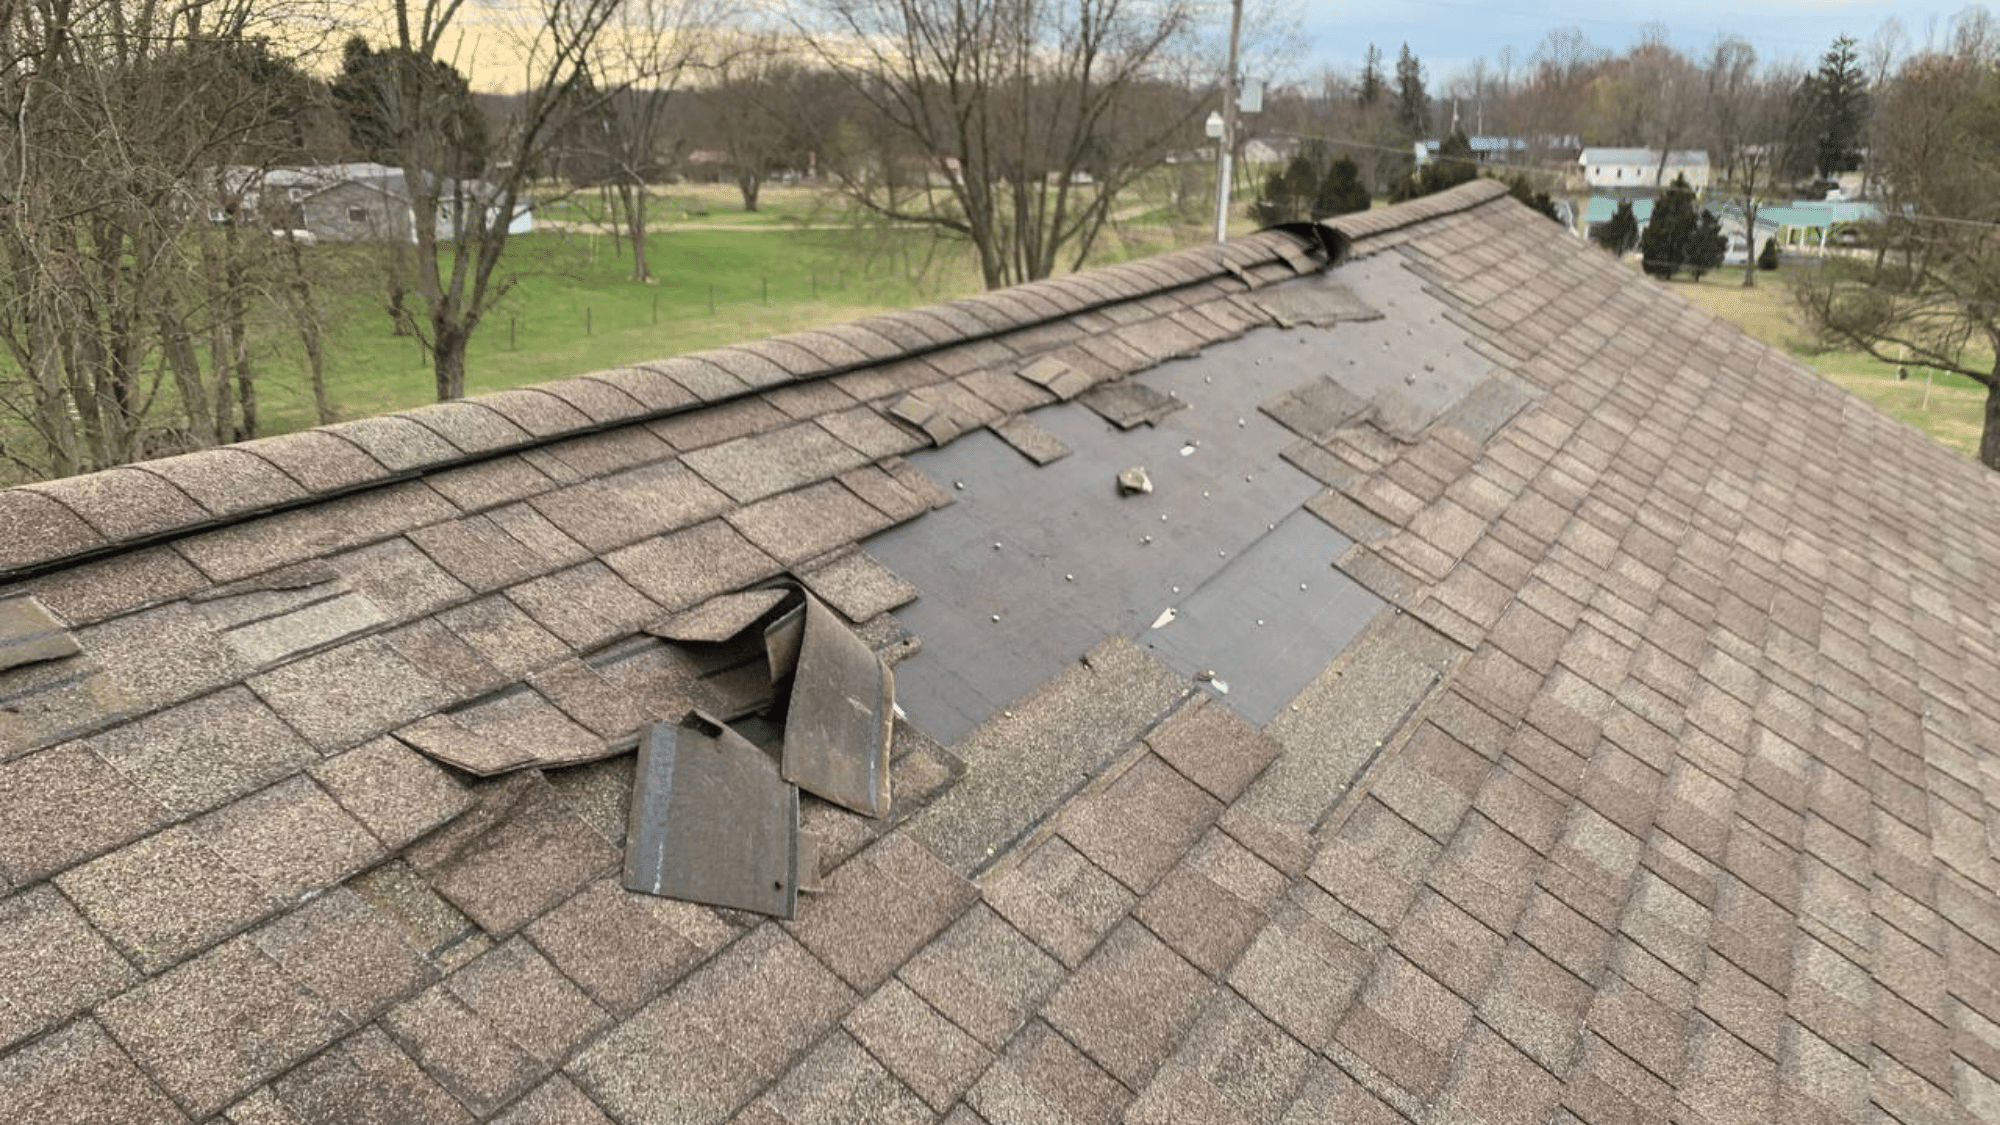 Strasburg Roof Damage - Maintenance